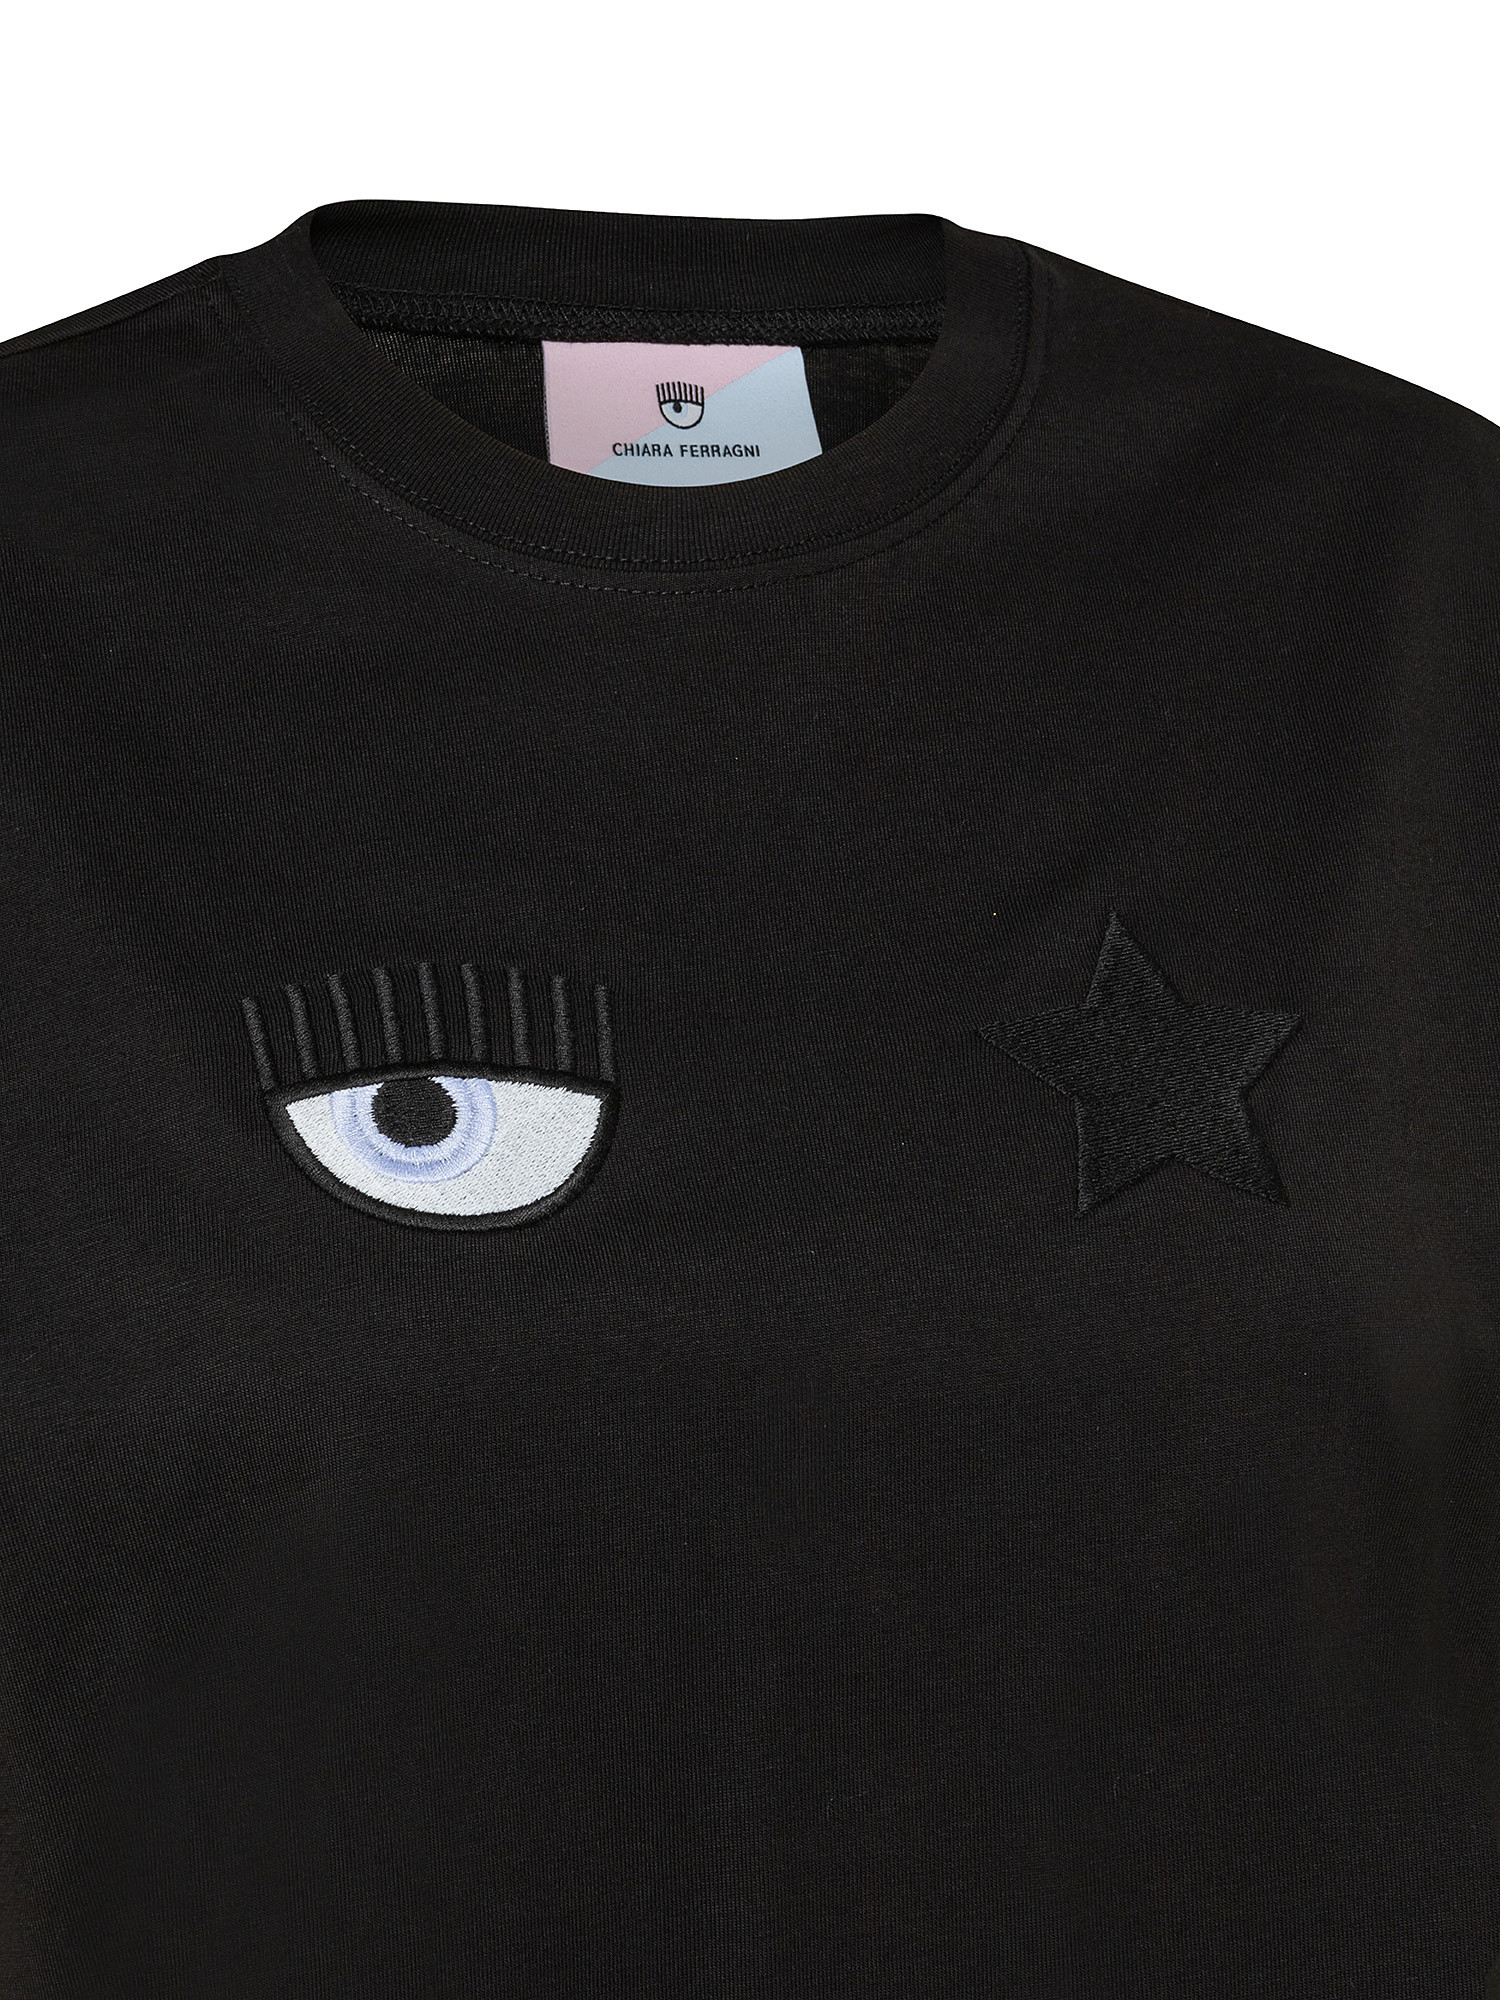 T-shirt Eye Star, Nero, large image number 2